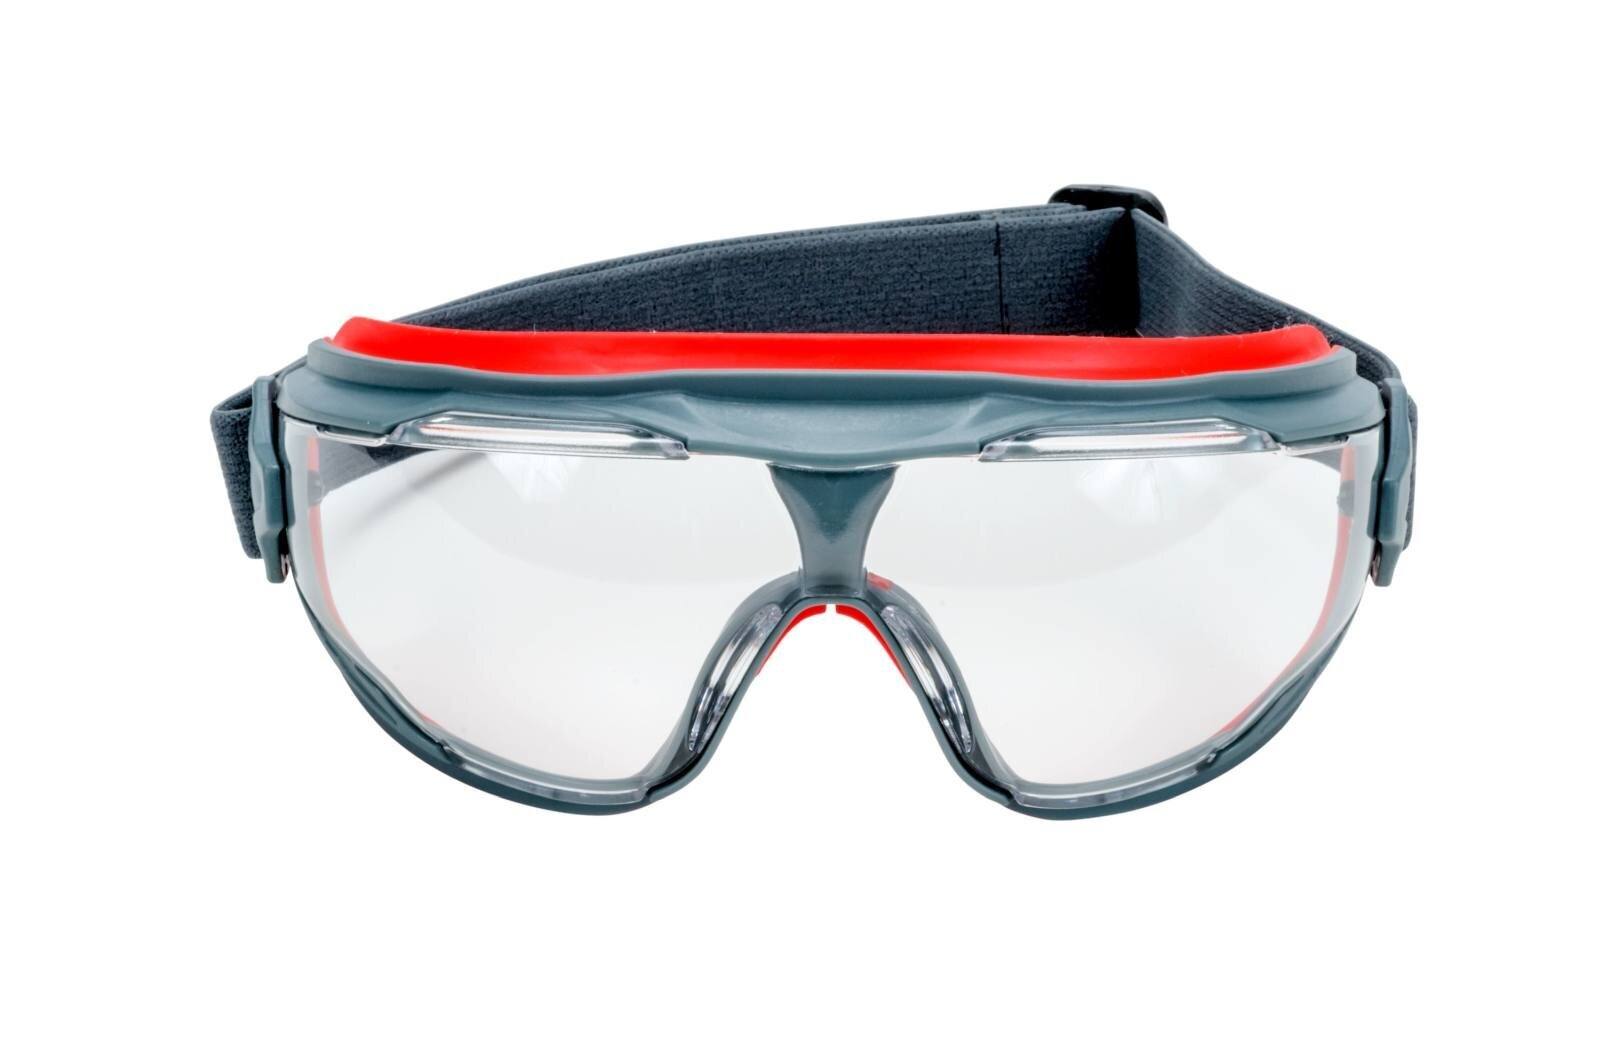 Occhiali 3M GoggleGear 500 a visione totale GG501V, lenti chiare, Scotchgard Anti-Fog, UV